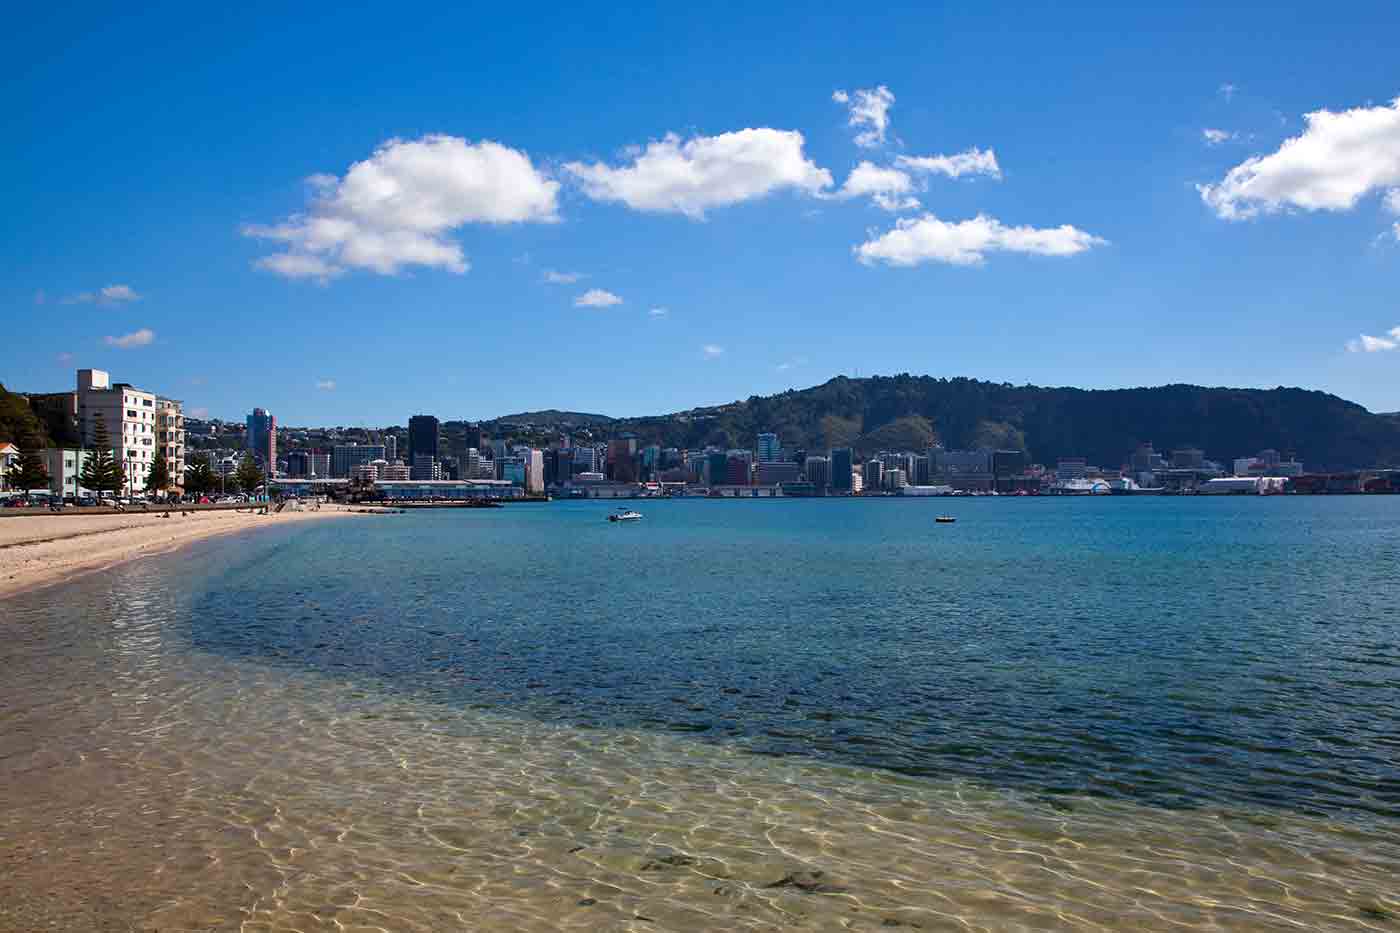 Wellington Beaches